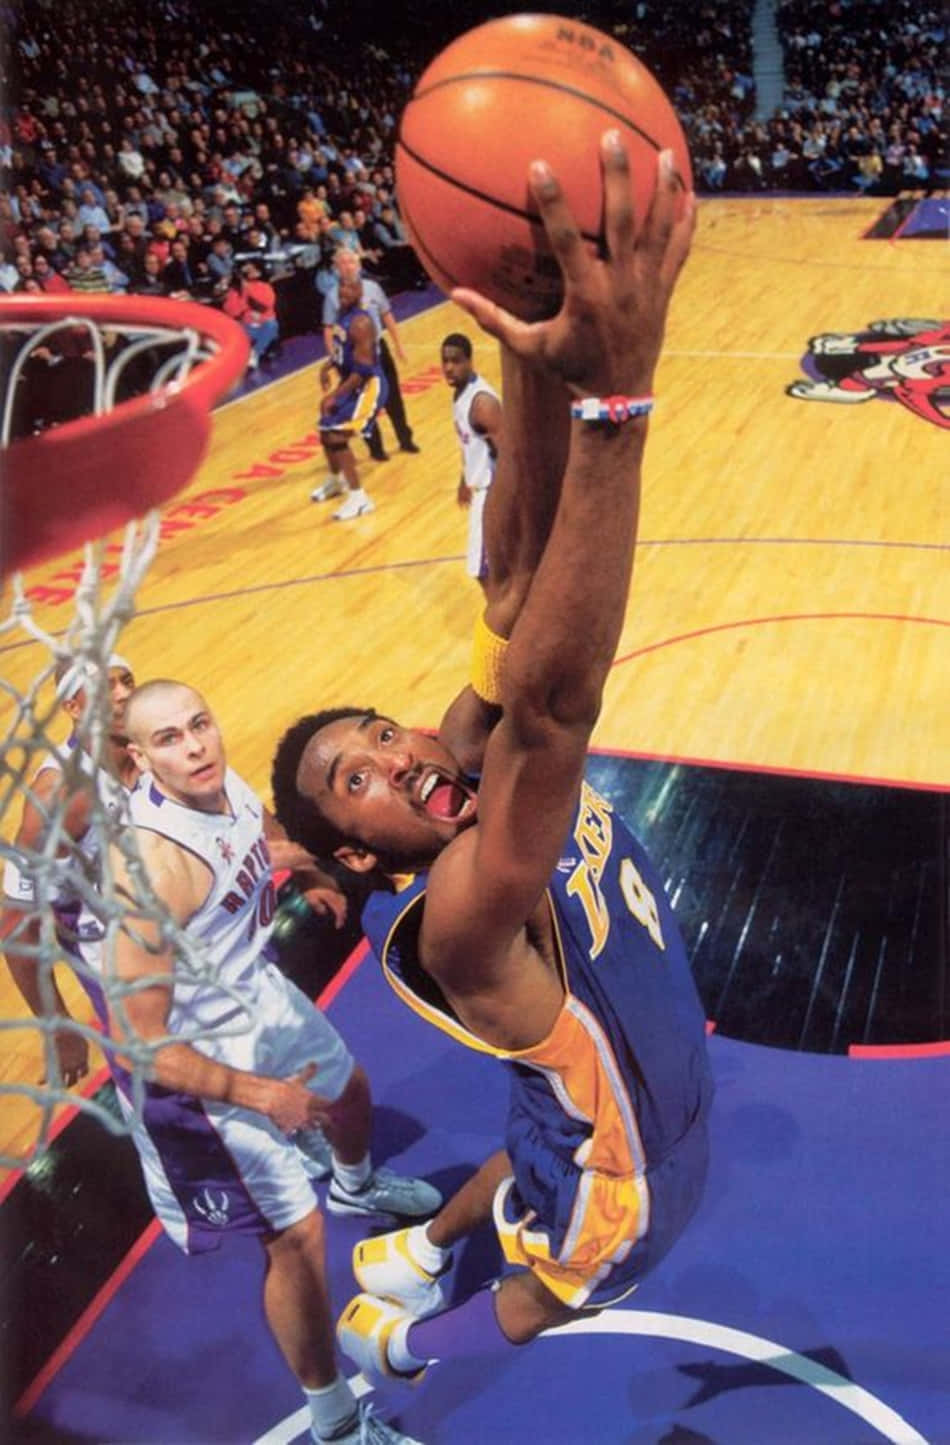 HD wallpaper Kobe Bryant player Basketball USA team Stuck Slam Dunk  nike  Wallpaper Flare